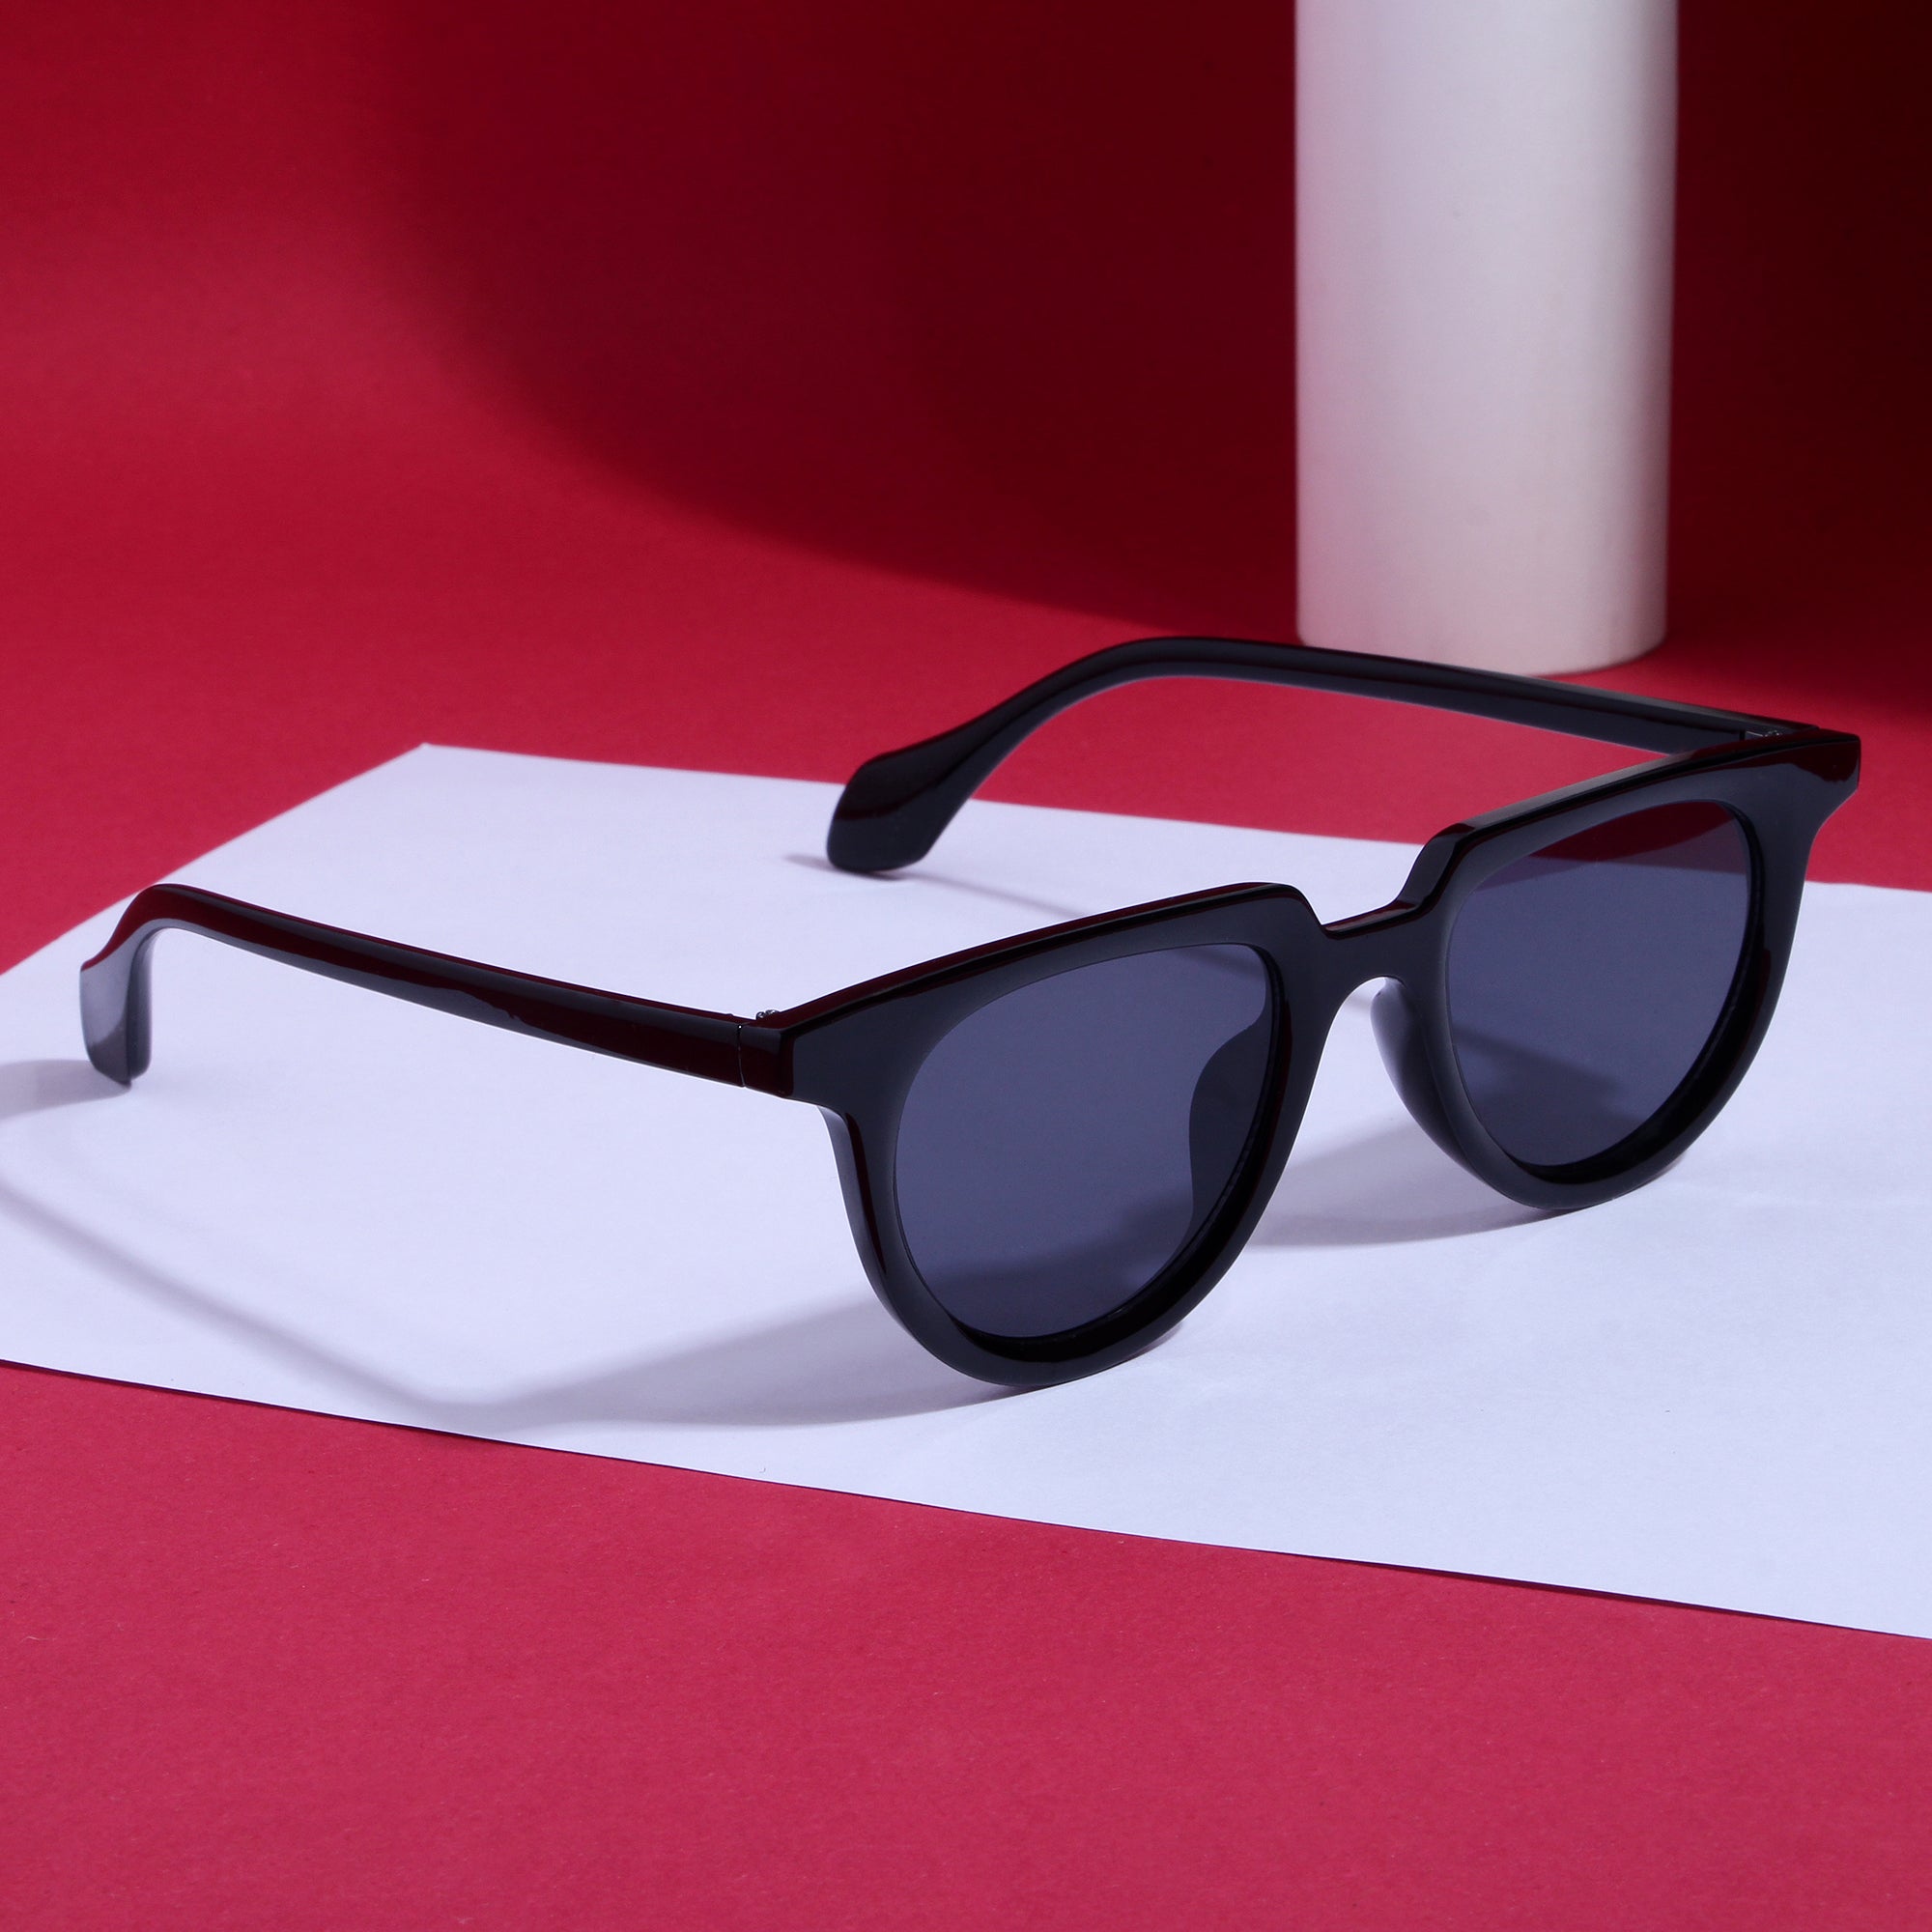 Gloviks V1 Black and Black Sunglasses